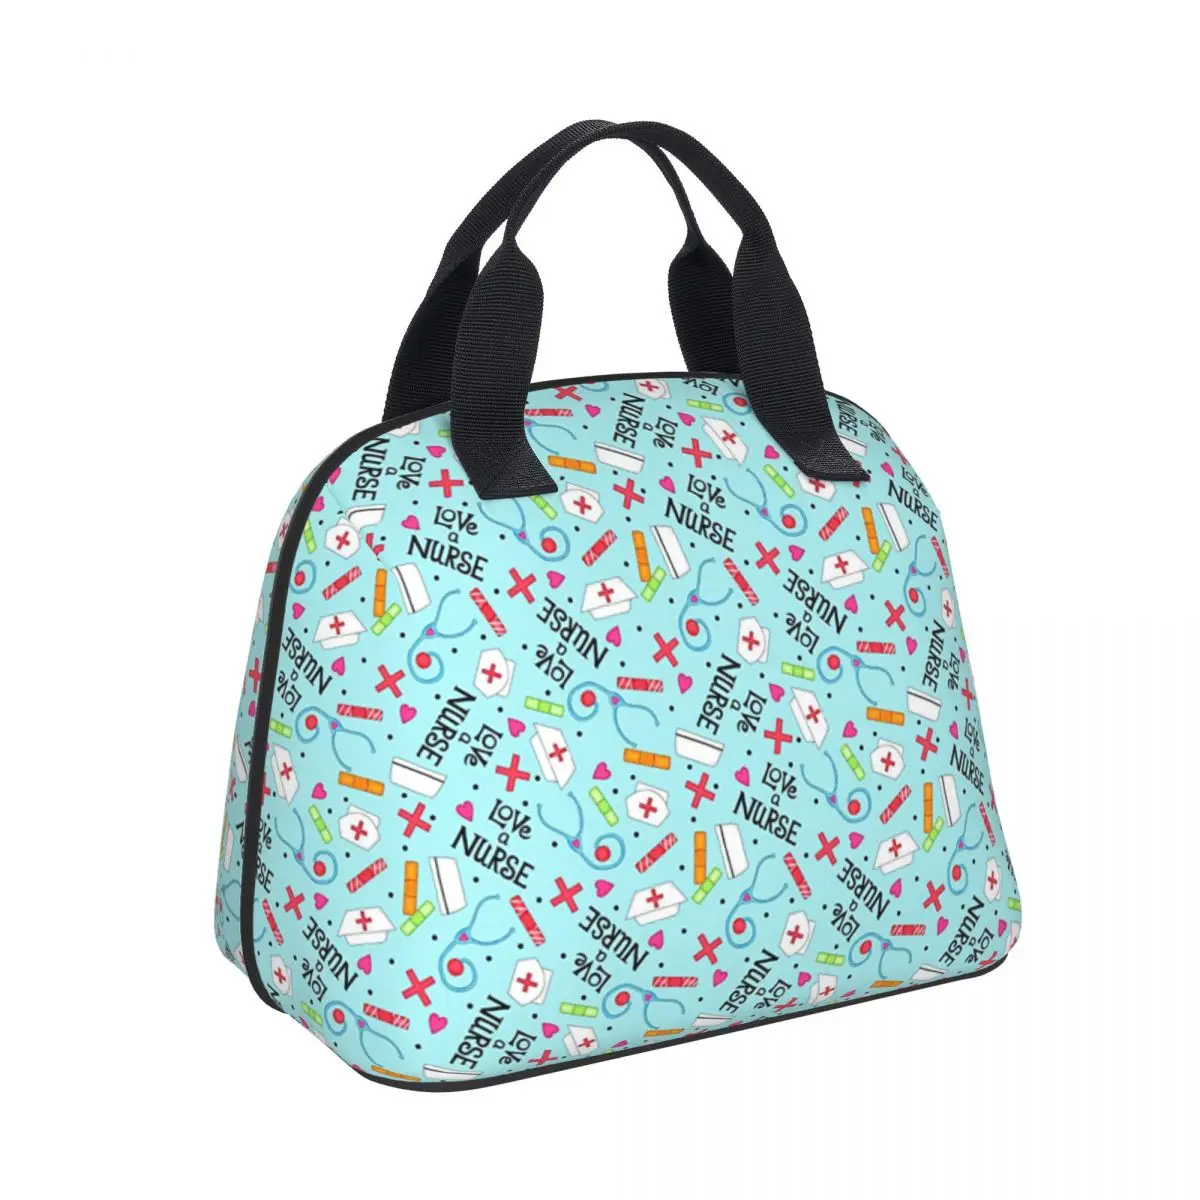 

NOISYDESIGNS Travel Nurse Bag Insulated Lunch Bags Women Cartoon Nurse Print Food Case School Cooler Warm Bento Box for Work